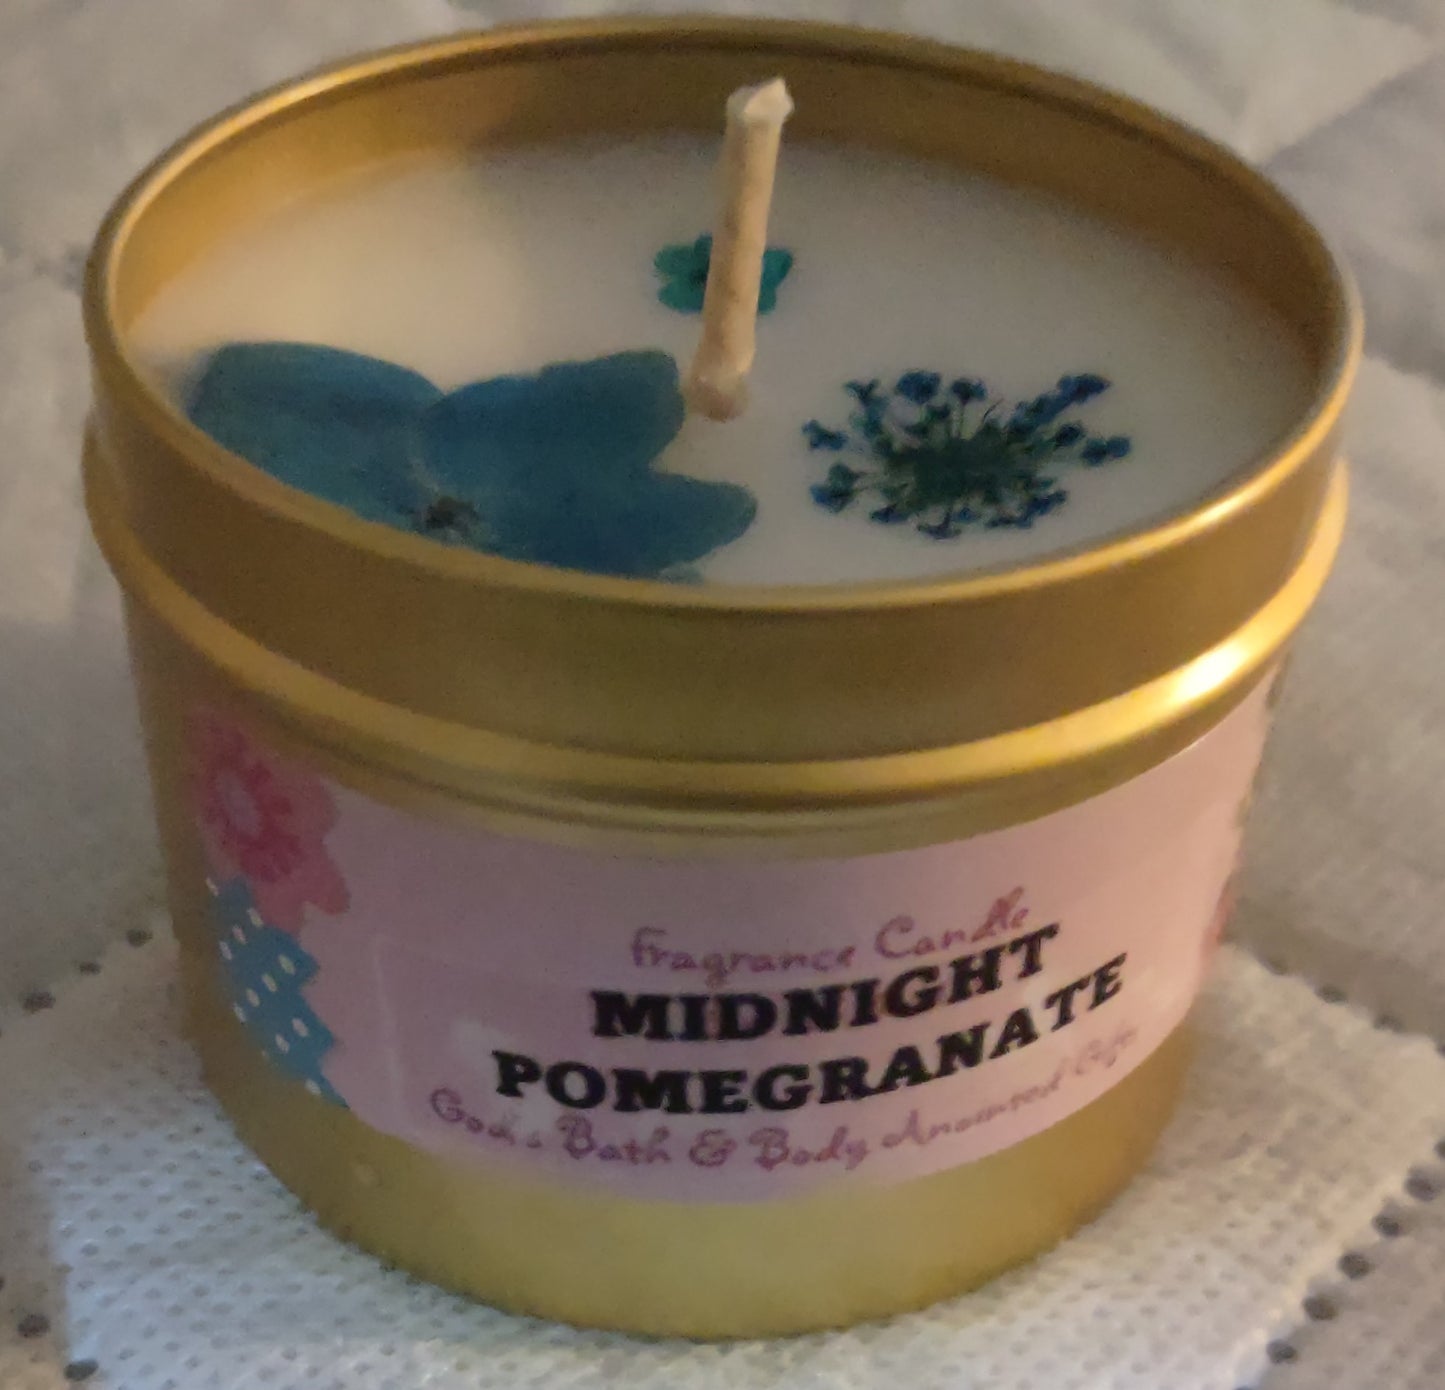 Midnight Pomegranate - 4oz metallic tin can with lid